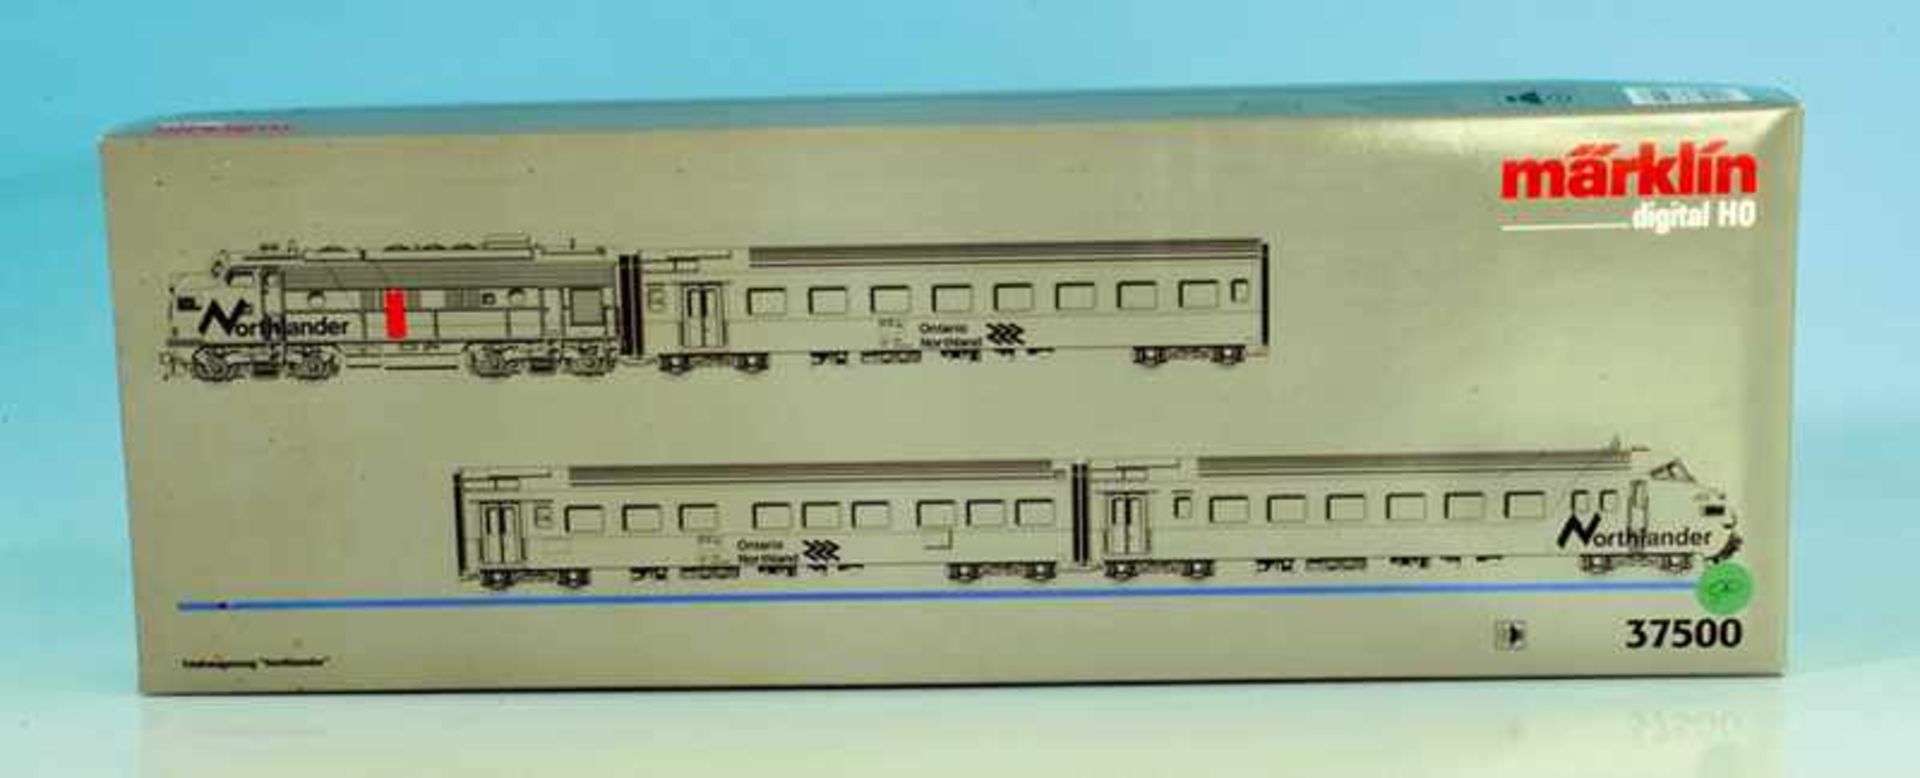 MÄRKLIN Triebwagenzug 37500, "Northlander", digital neuwertig, im OKT.